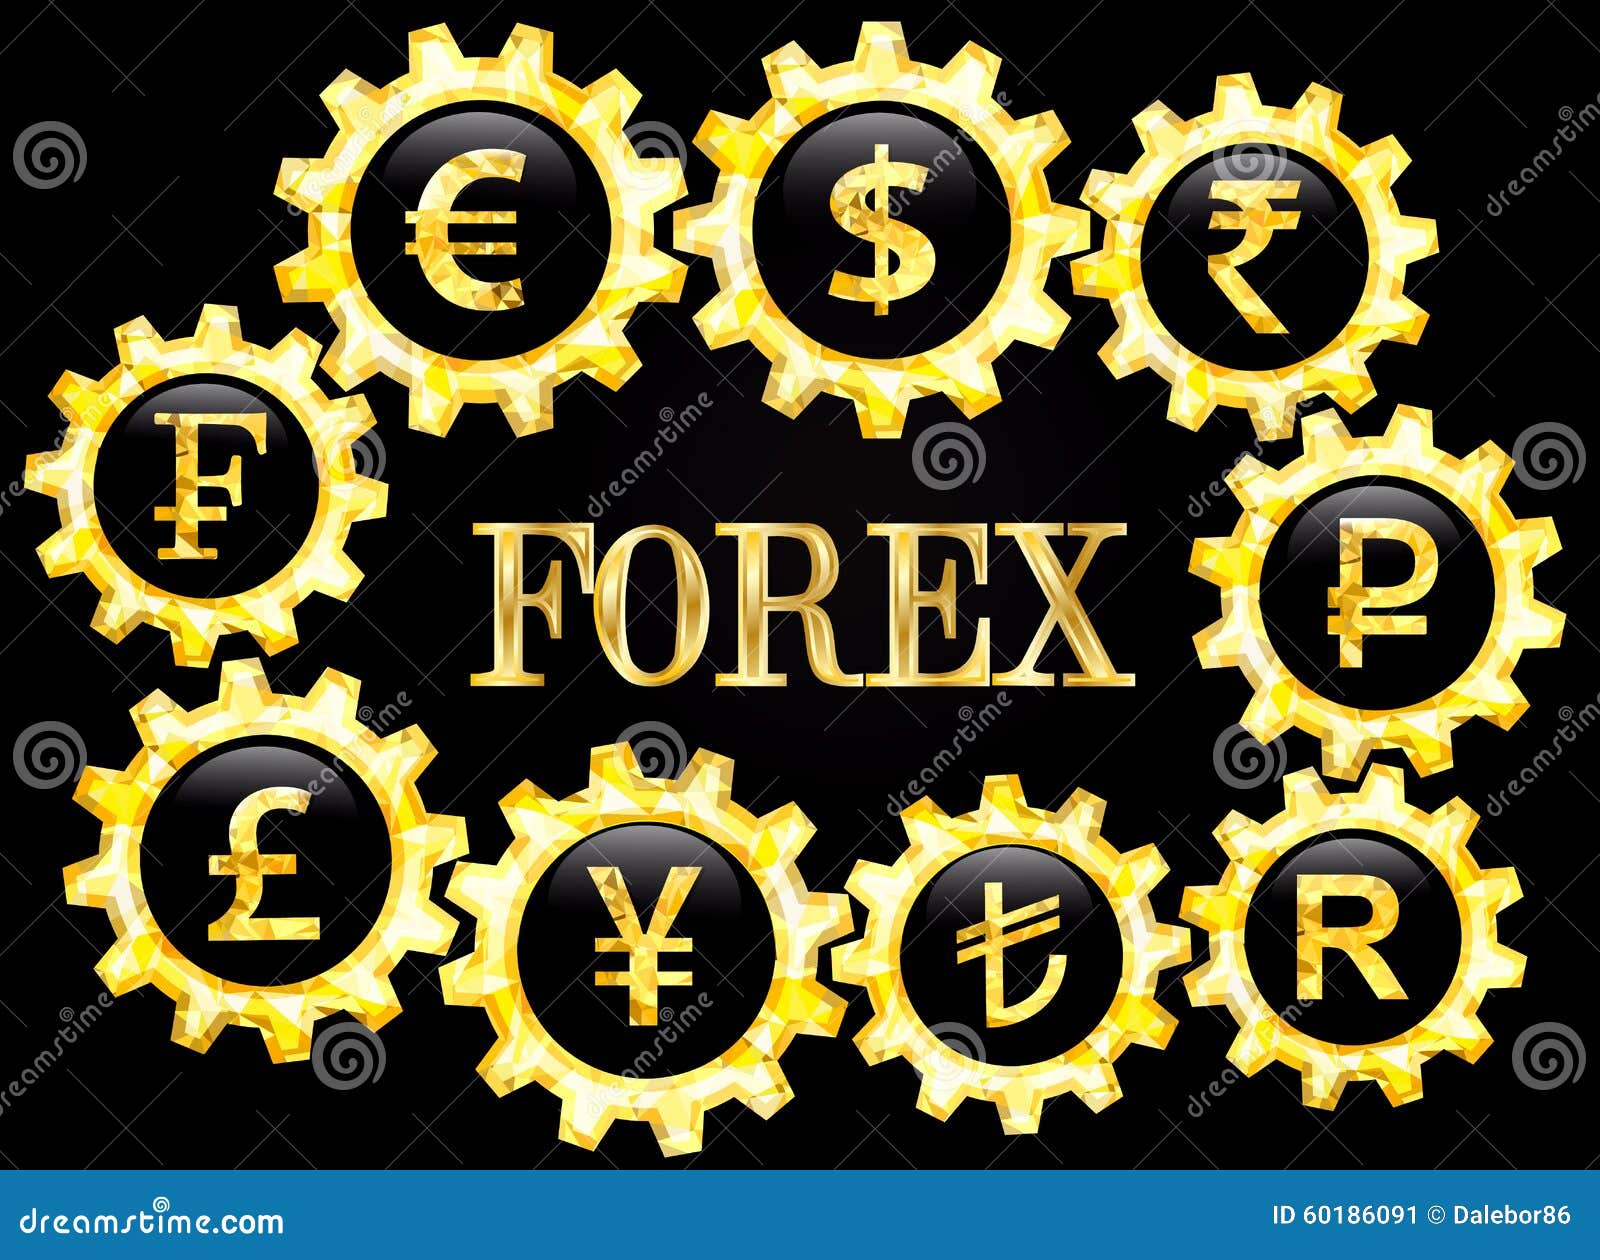 Forex trading symbols